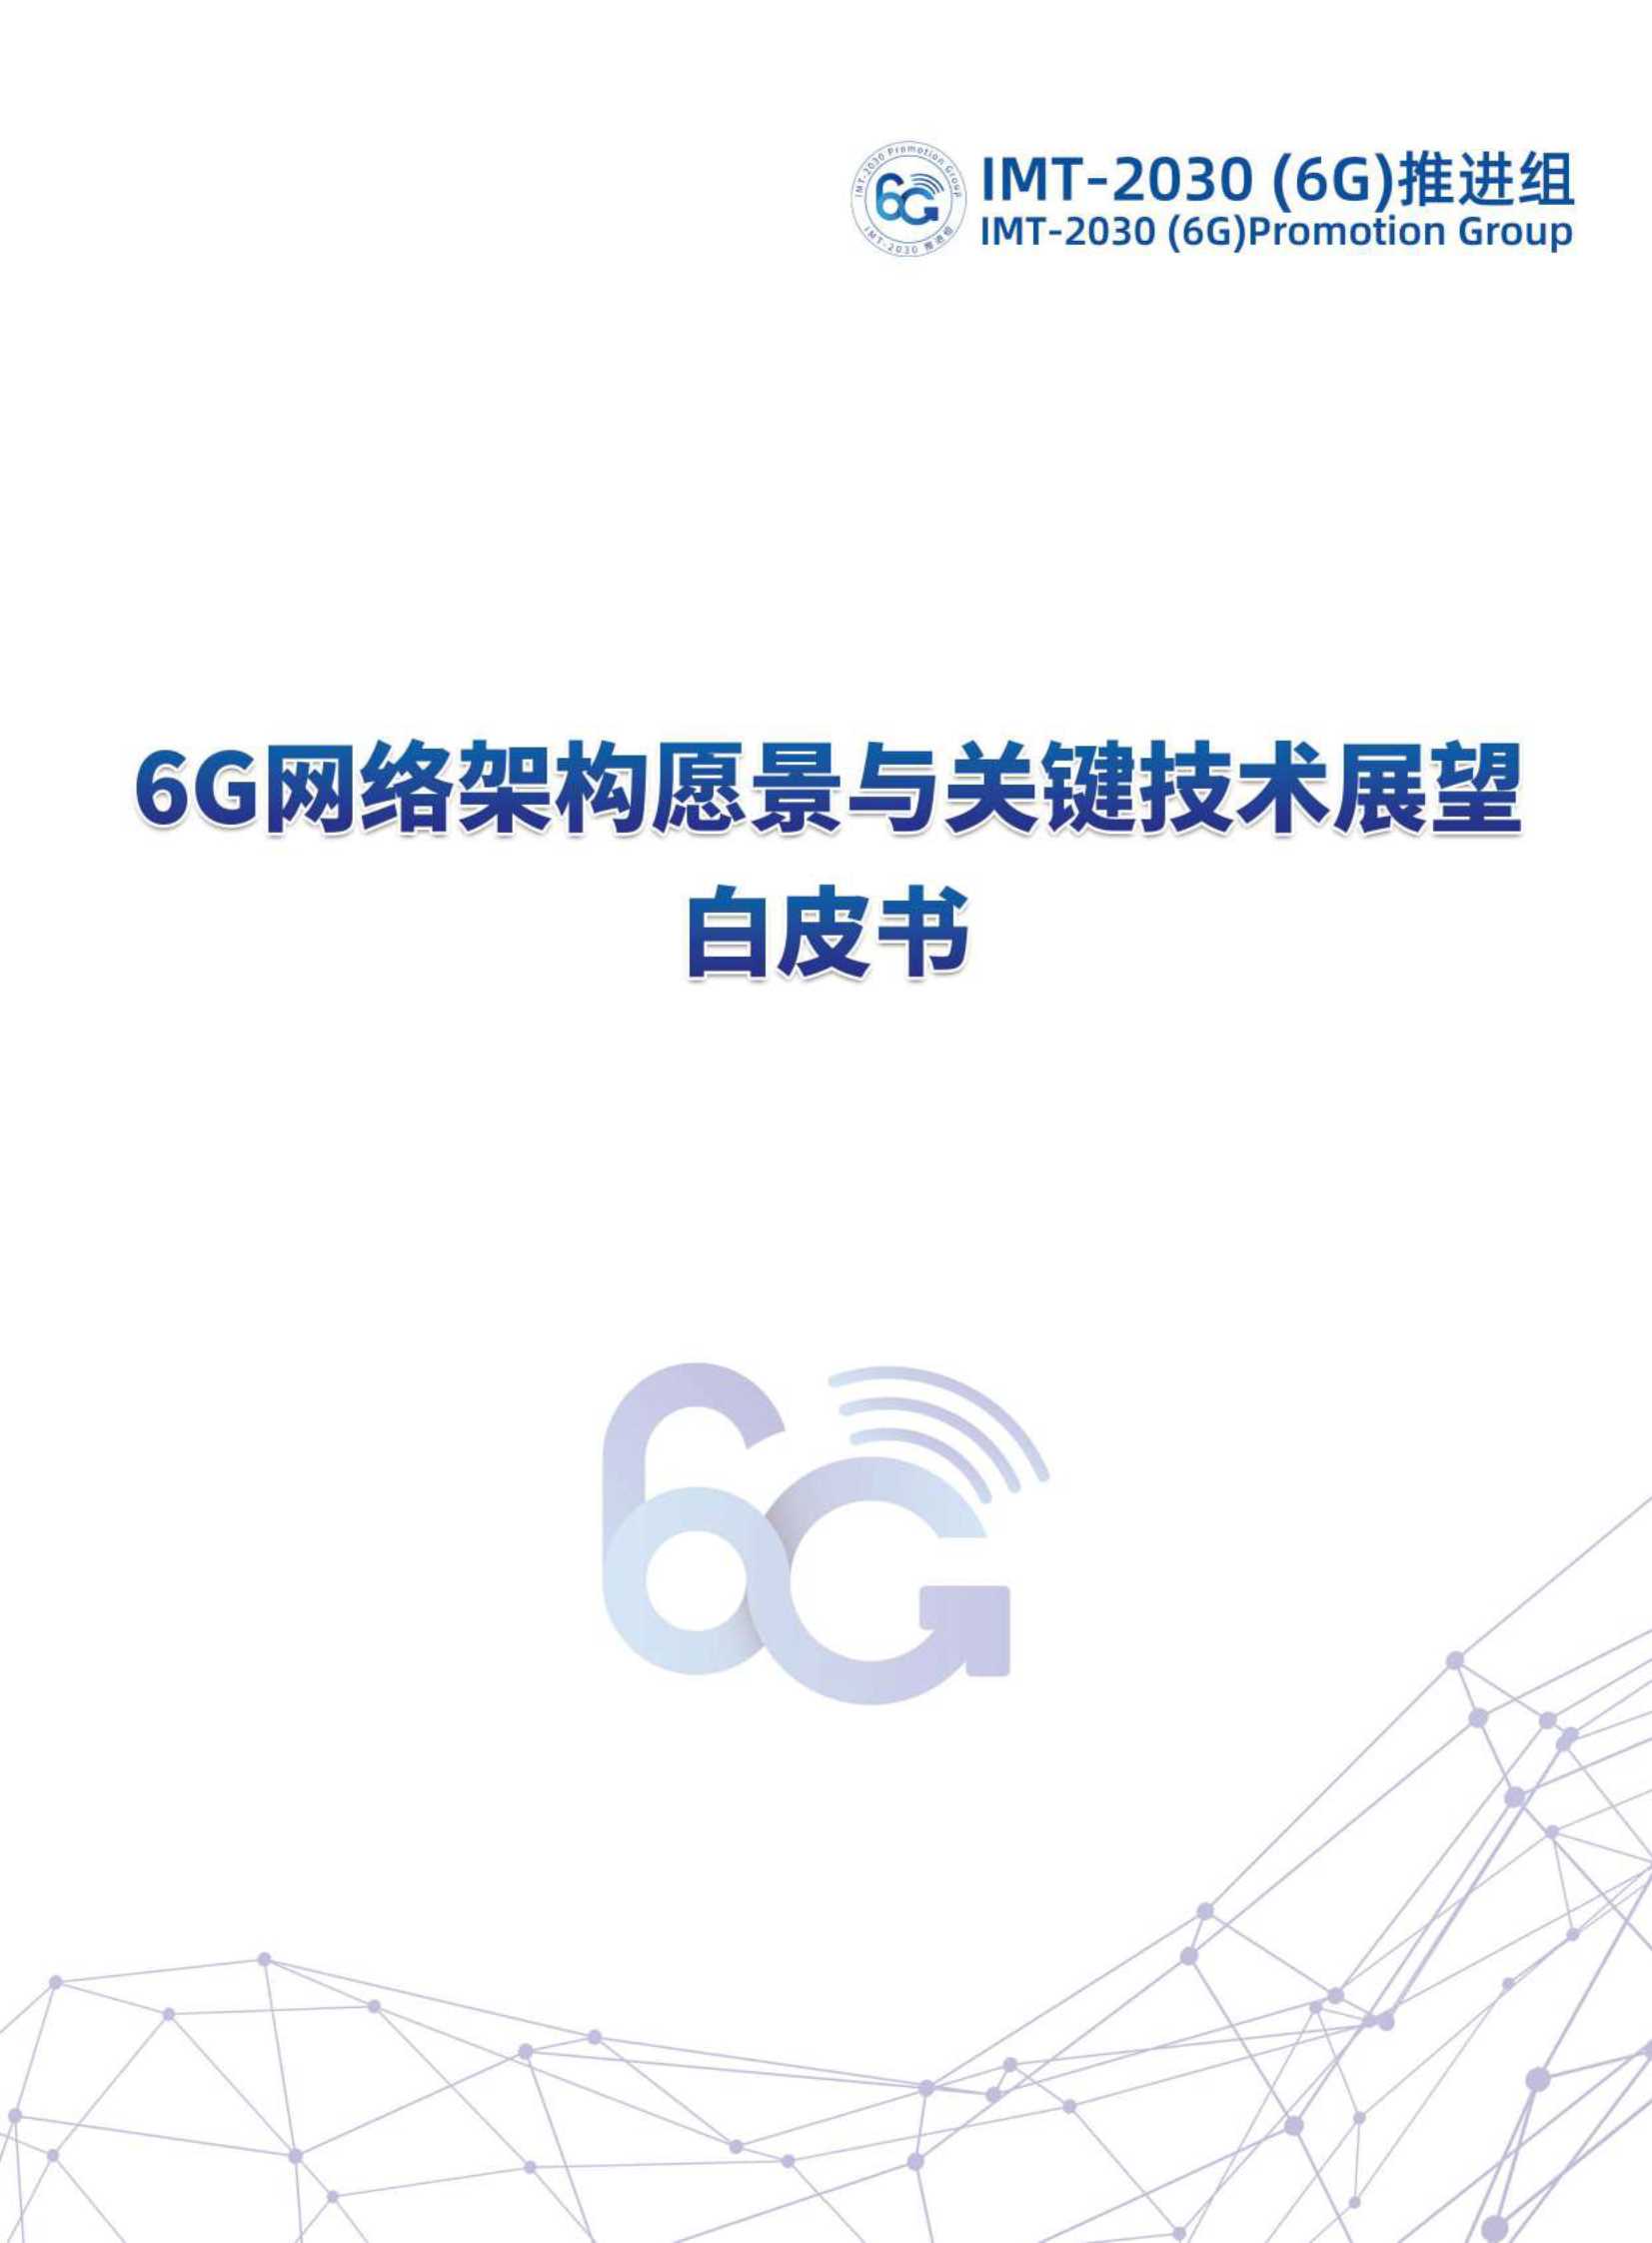 IMT 2030 推进组-6G网络架构愿景与关键技术展望白皮书-2021.09-32页